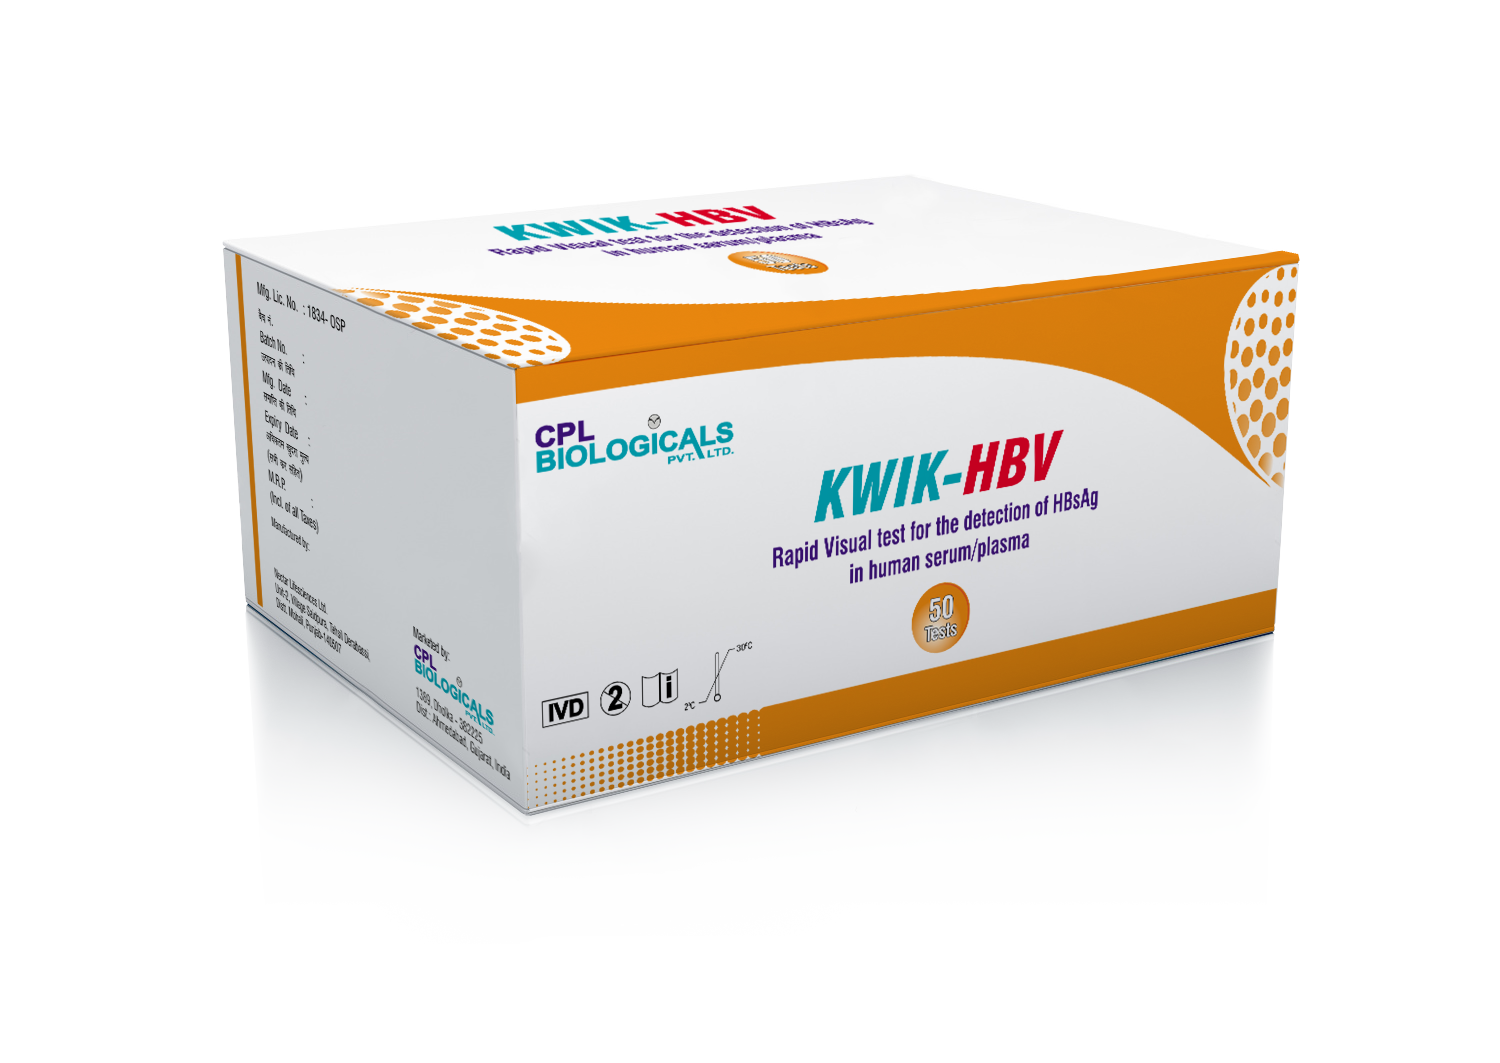 KWIK-HBV